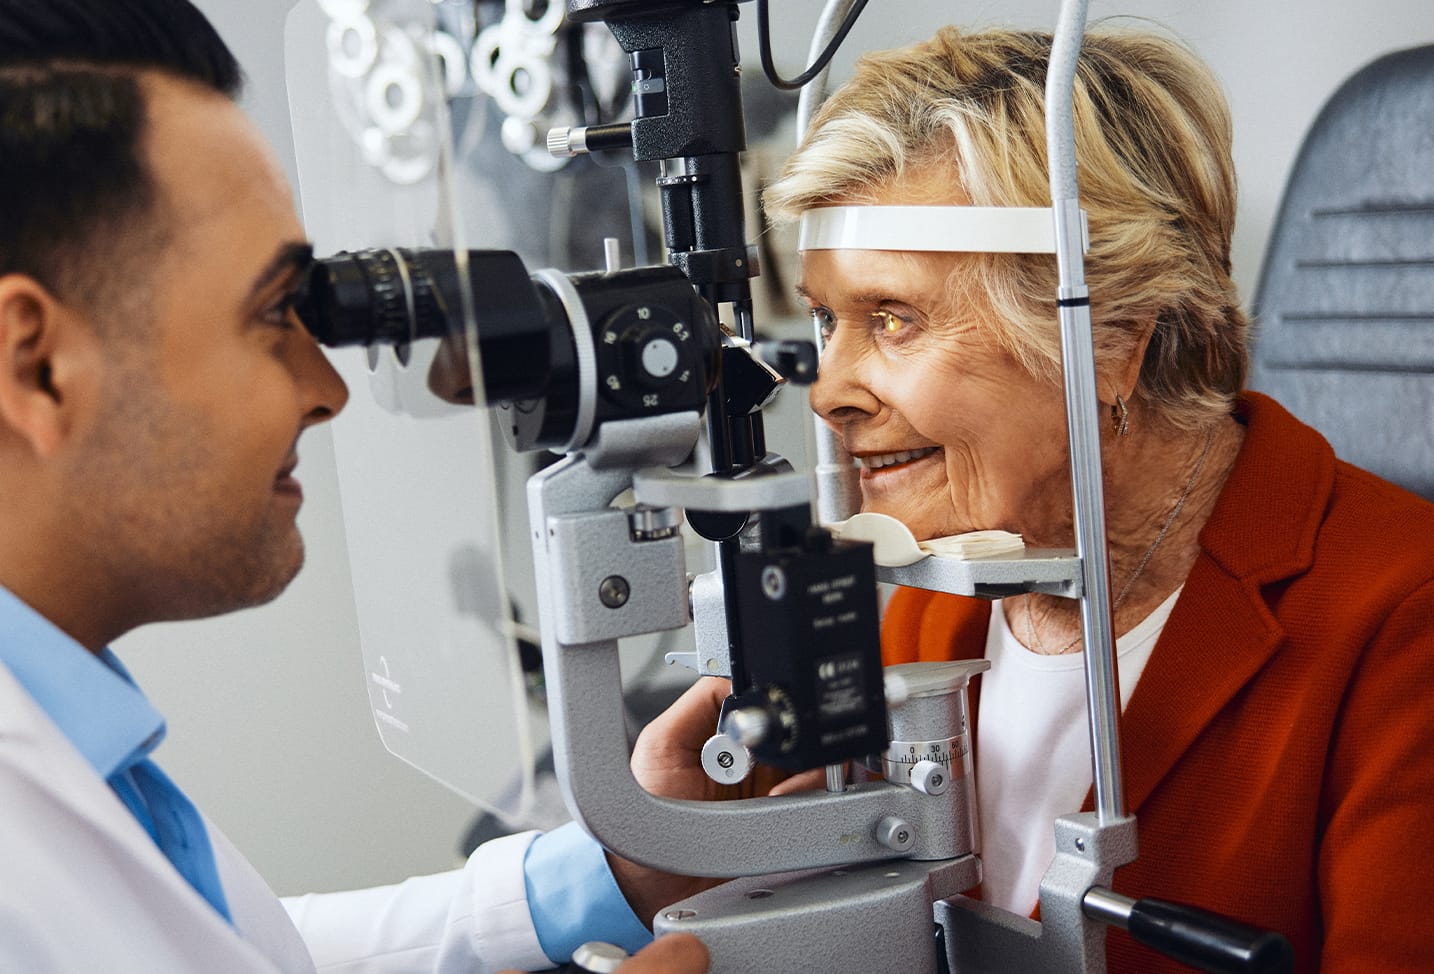 Woman getting an eye exam